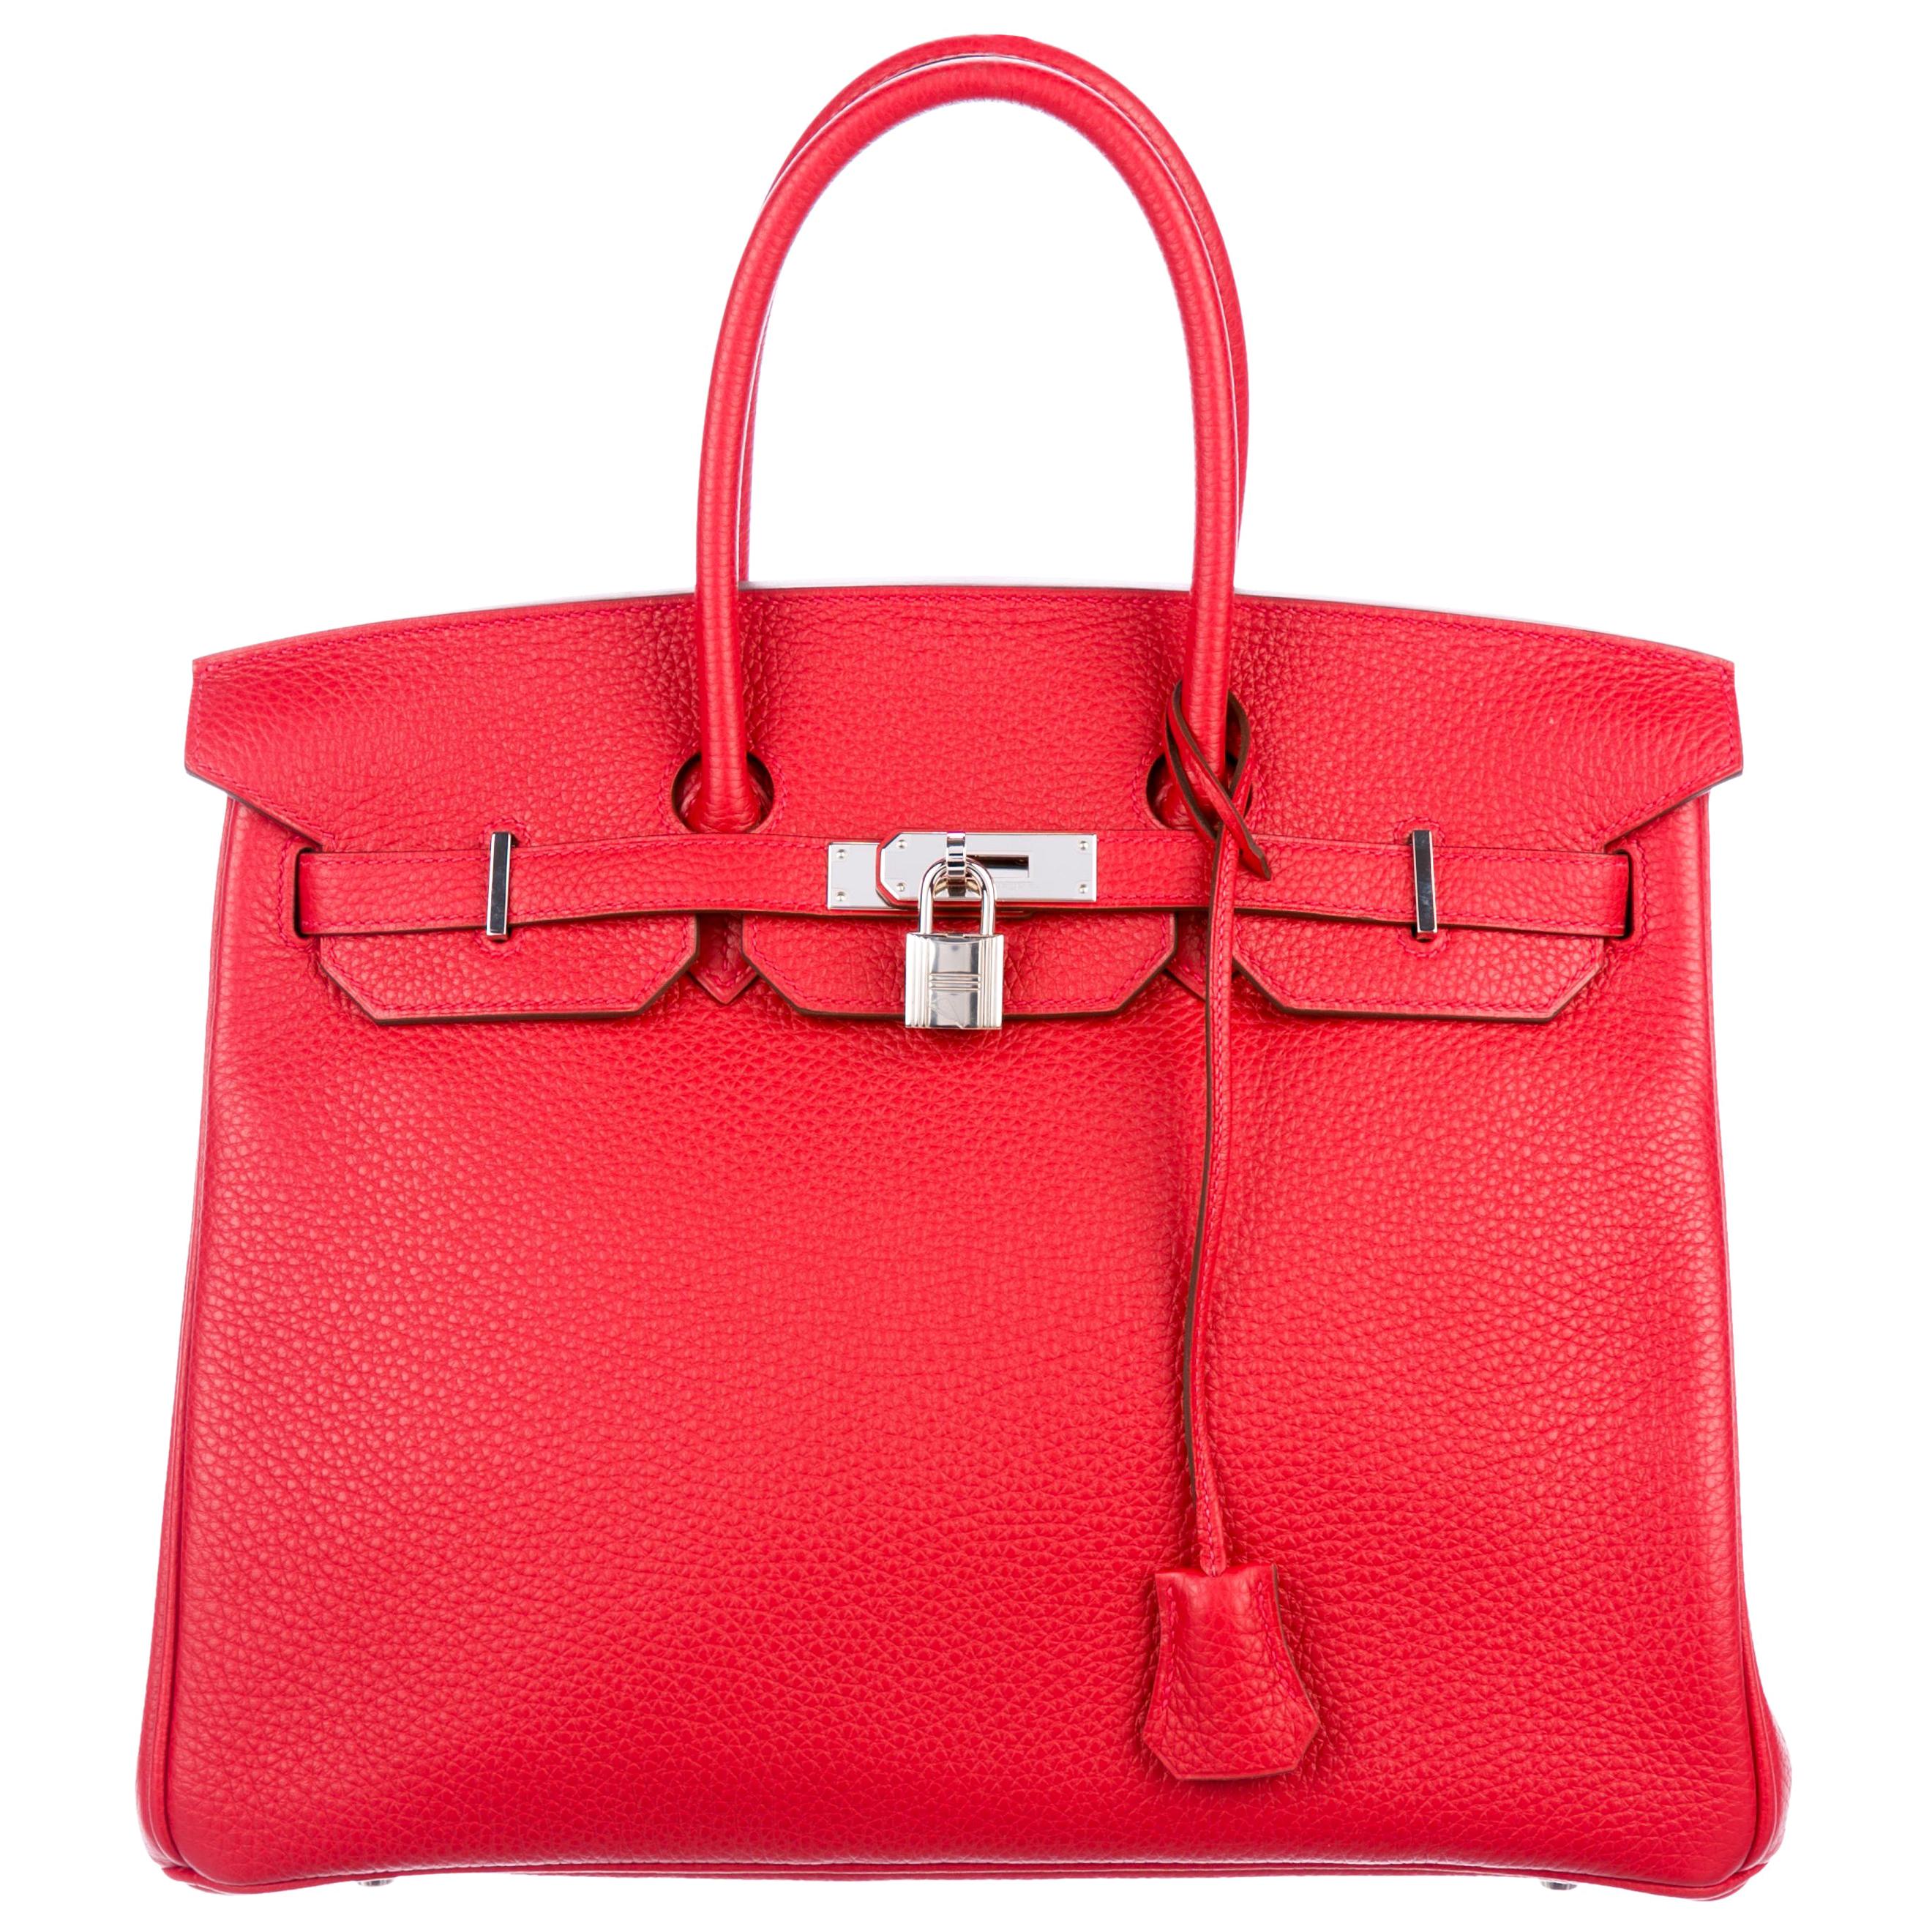 Hermes Birkin 35 Rouge Garance Togo Leather Top Handle Satchel Tote Bag